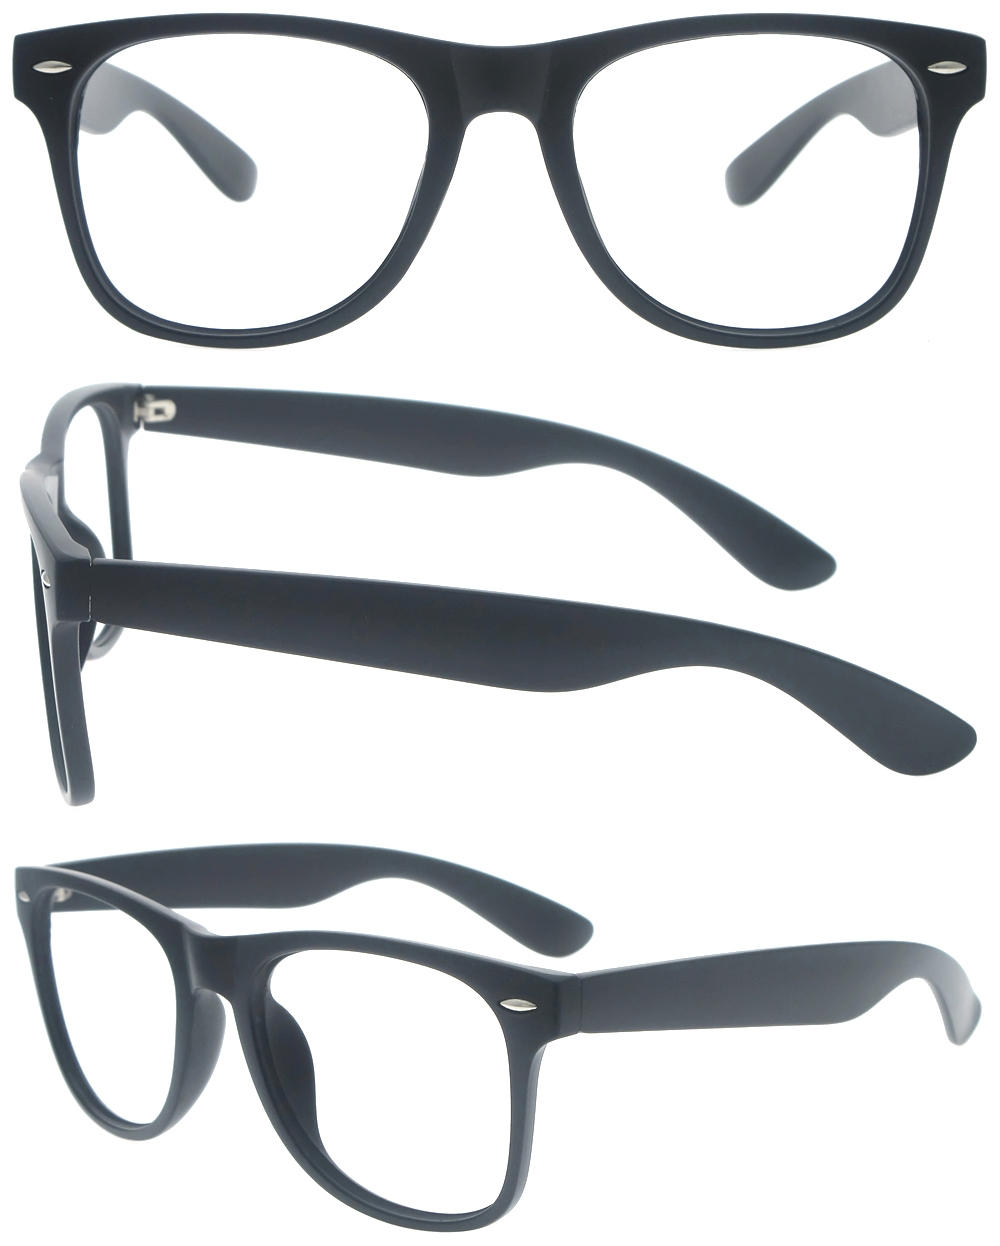 Dachuan Optical DSP348003 China Supplier Trendy Wayfarer Plastic Sunglasses With Metal Hinge (1)